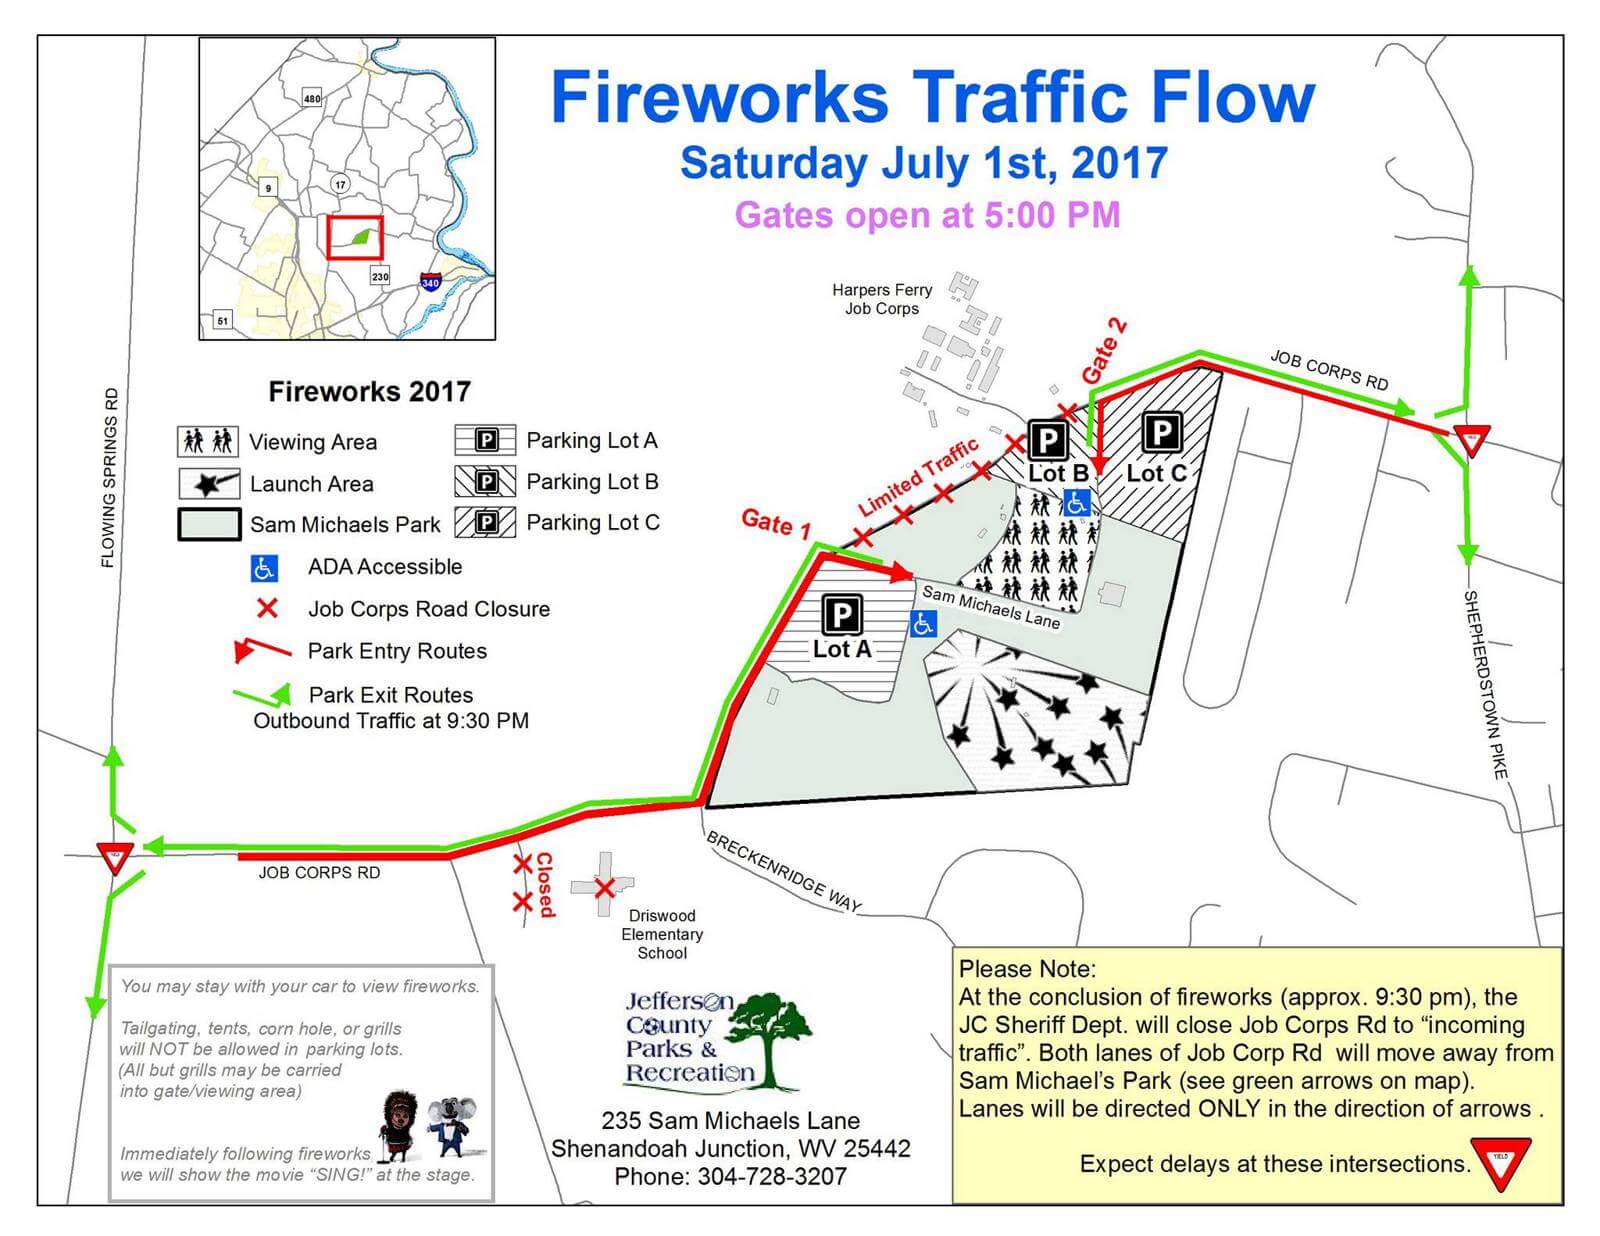 Fireworks Jefferson County Parks & Recreation